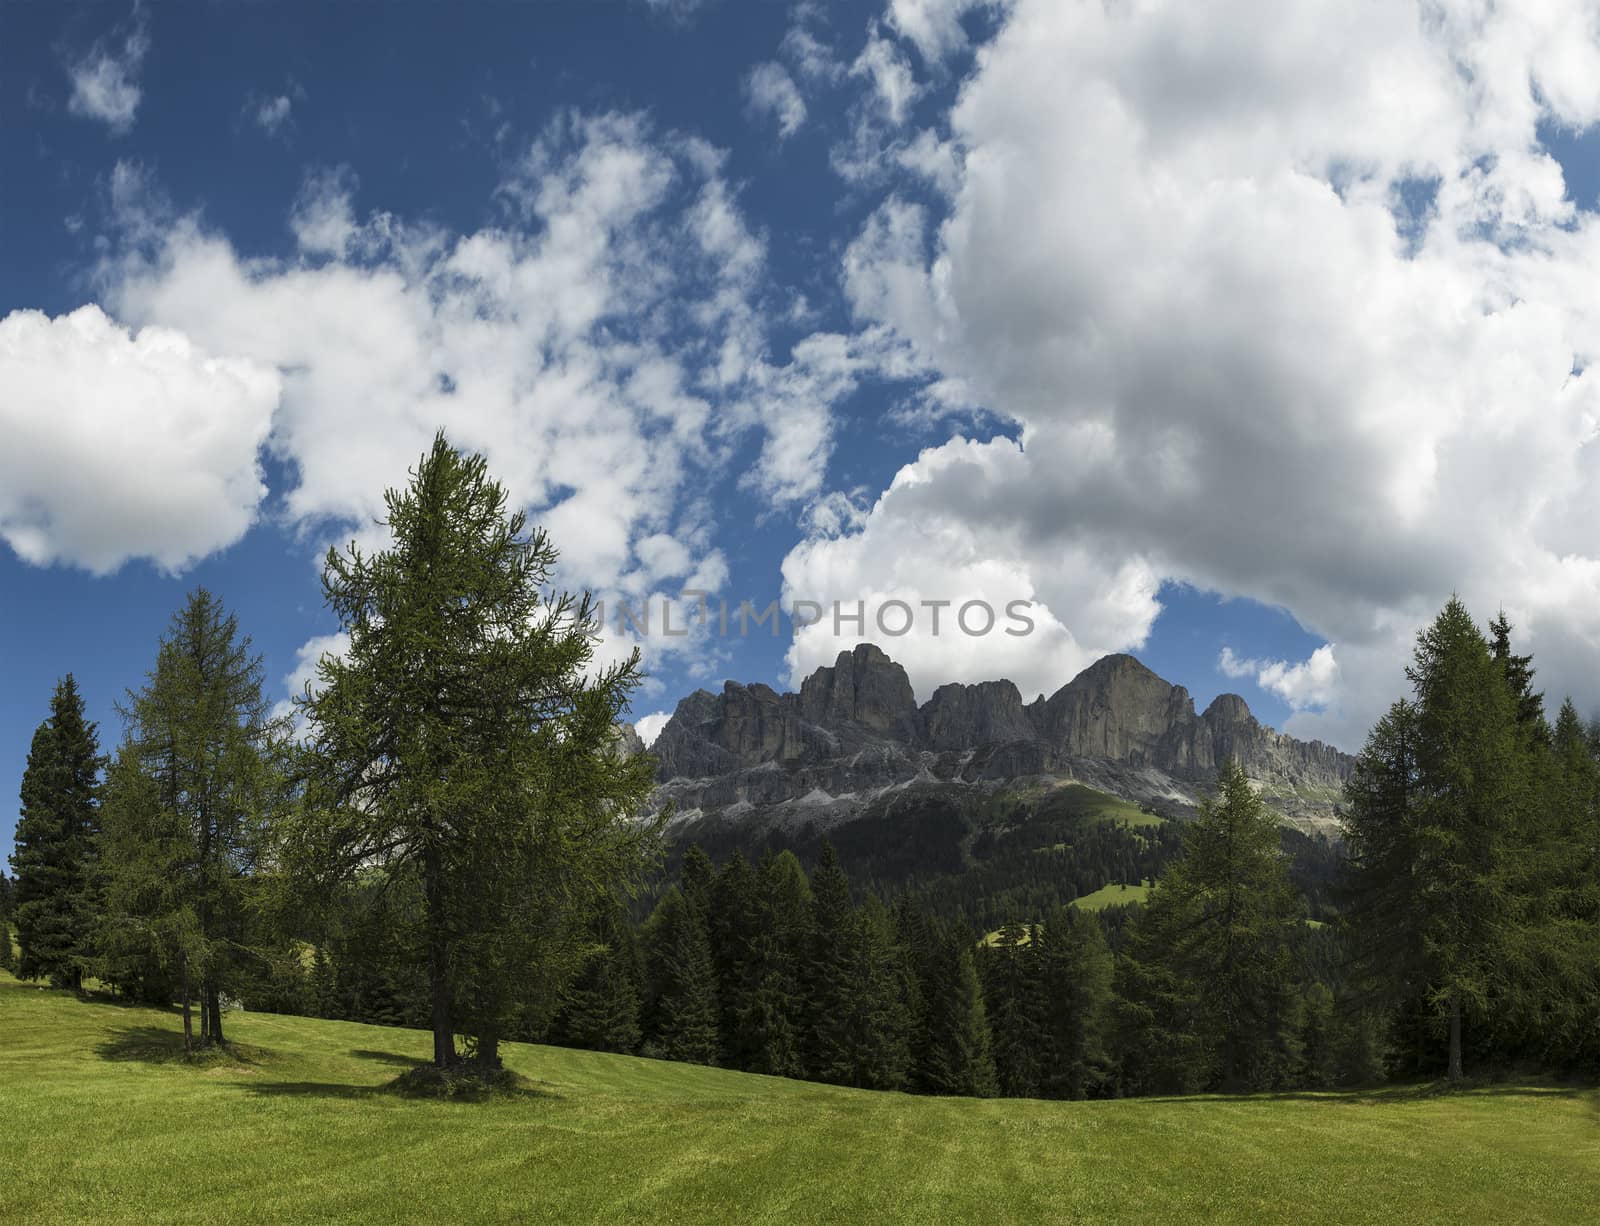 Dolomiti, Catinaccio panorama from Colbleggio meadow - Karersee, Italy